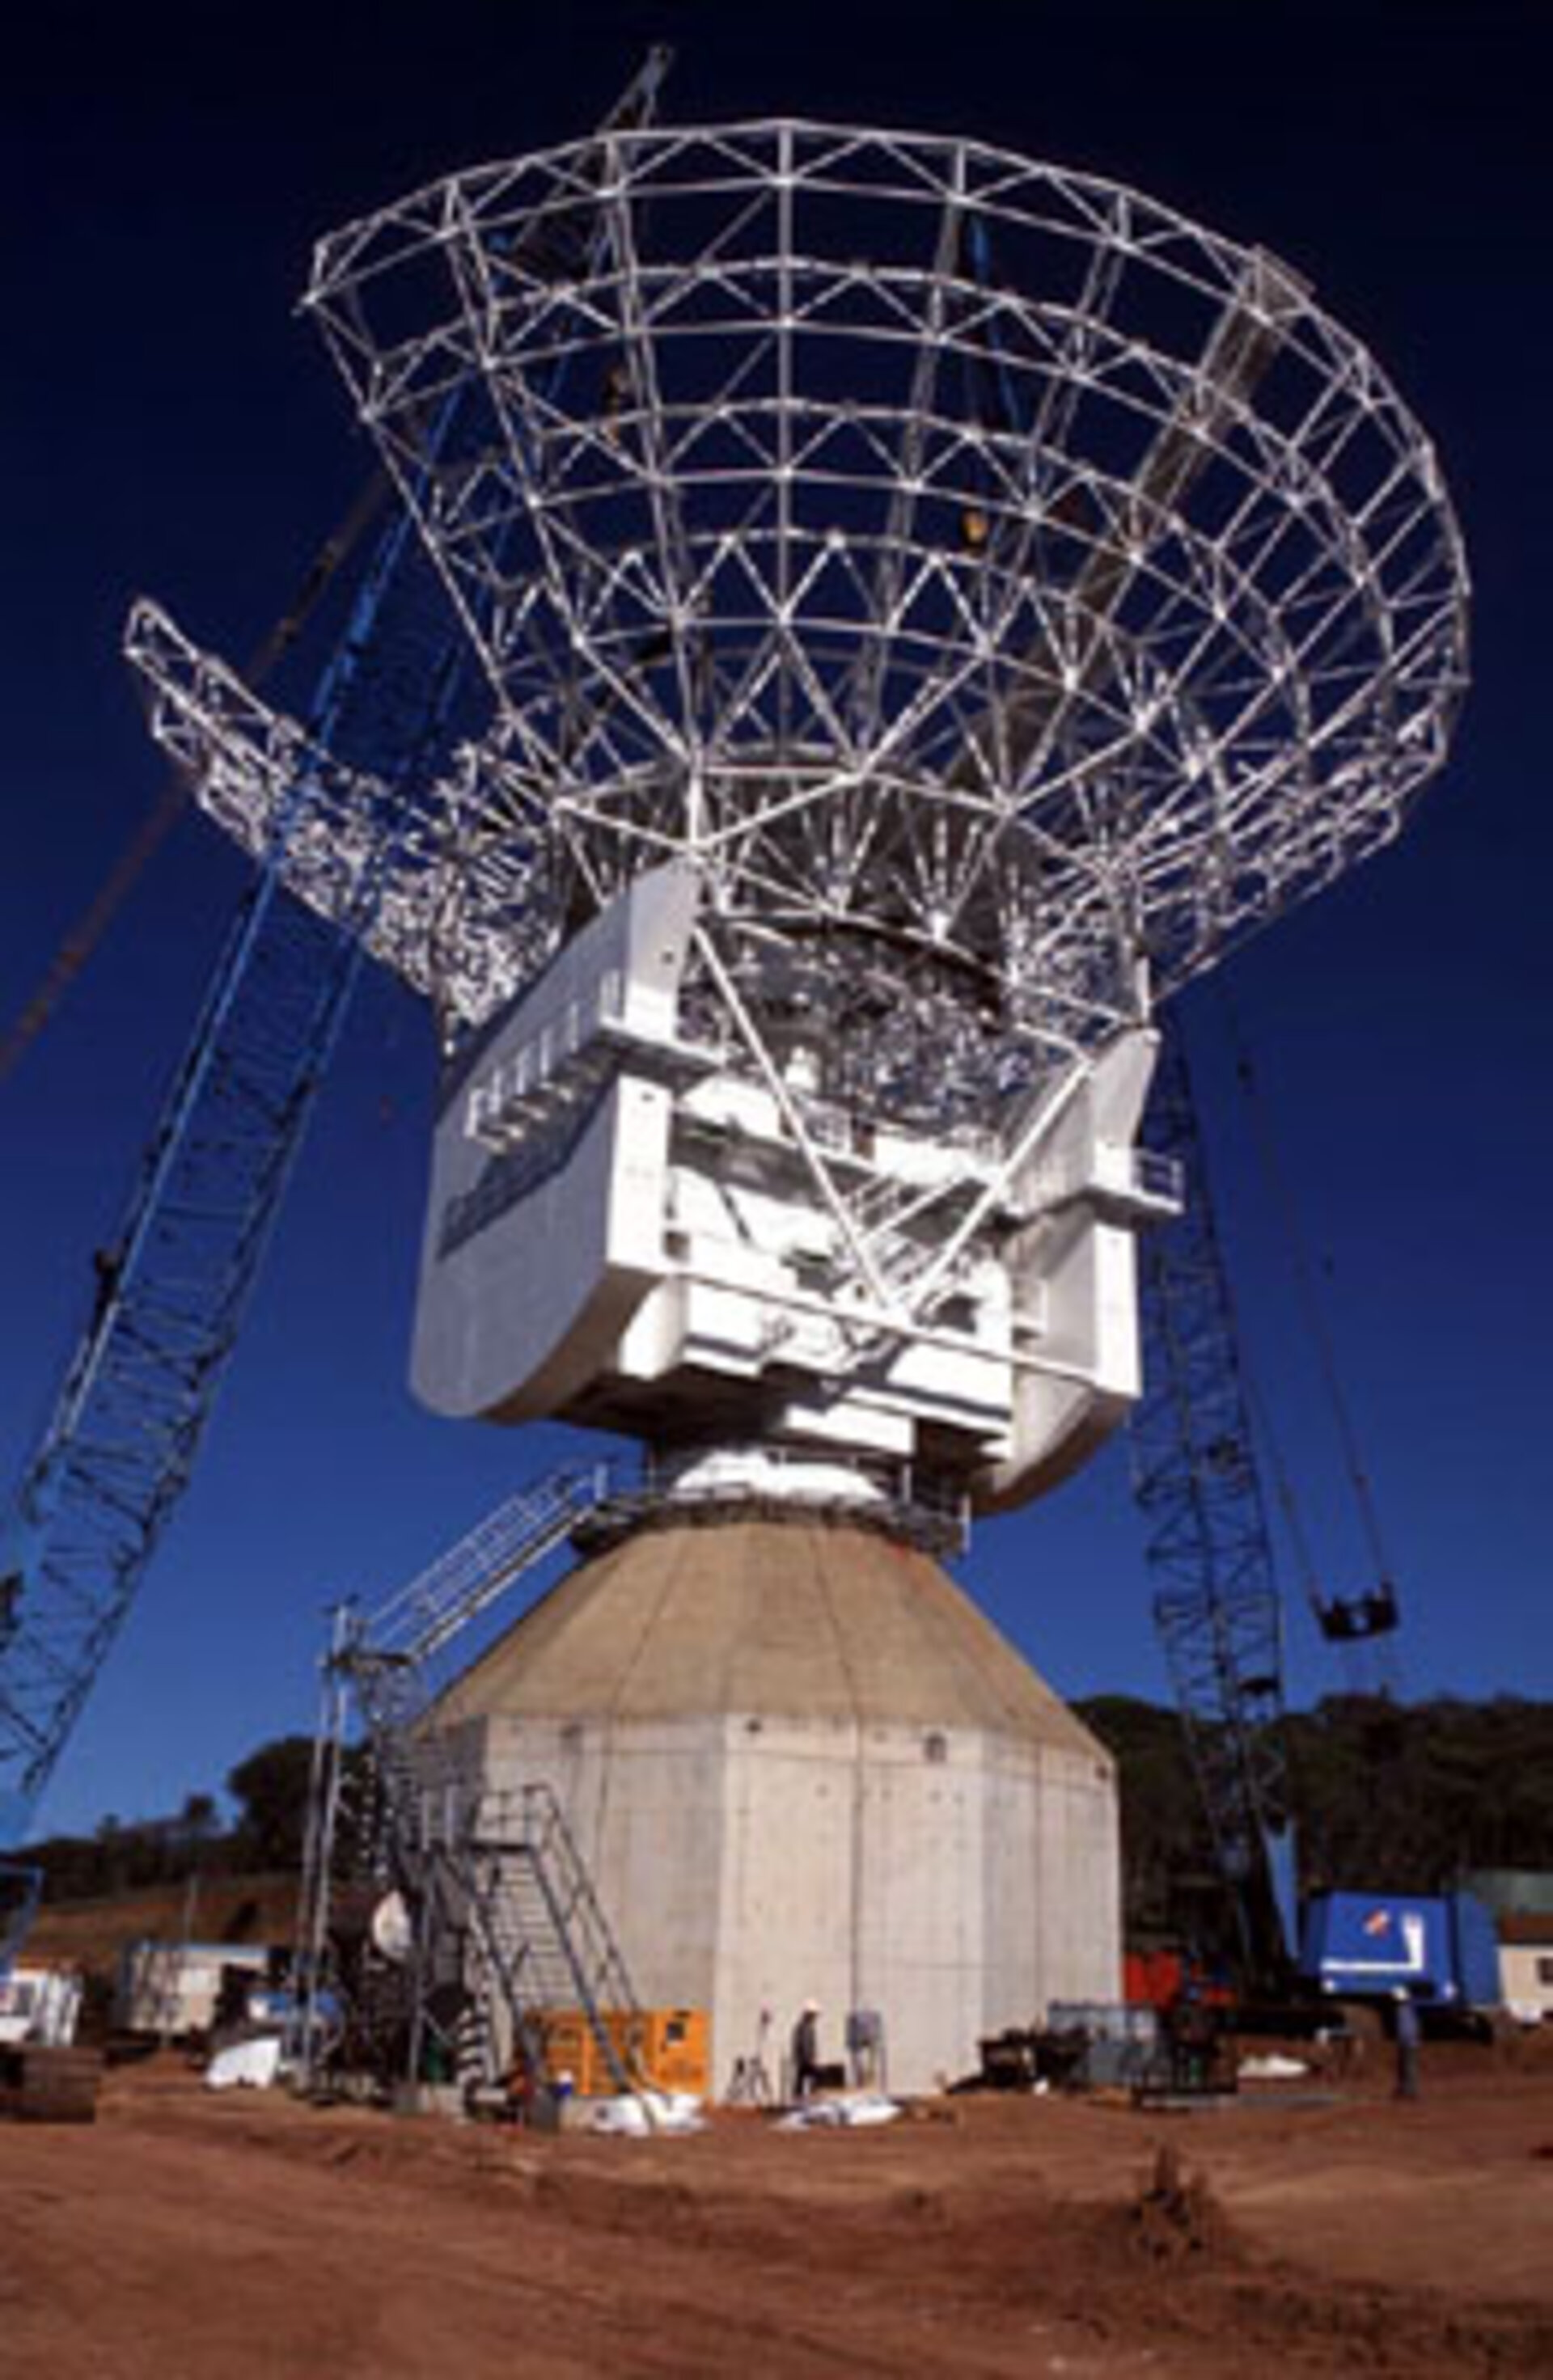 ESA's new antenna at New Norcia, Western Australia